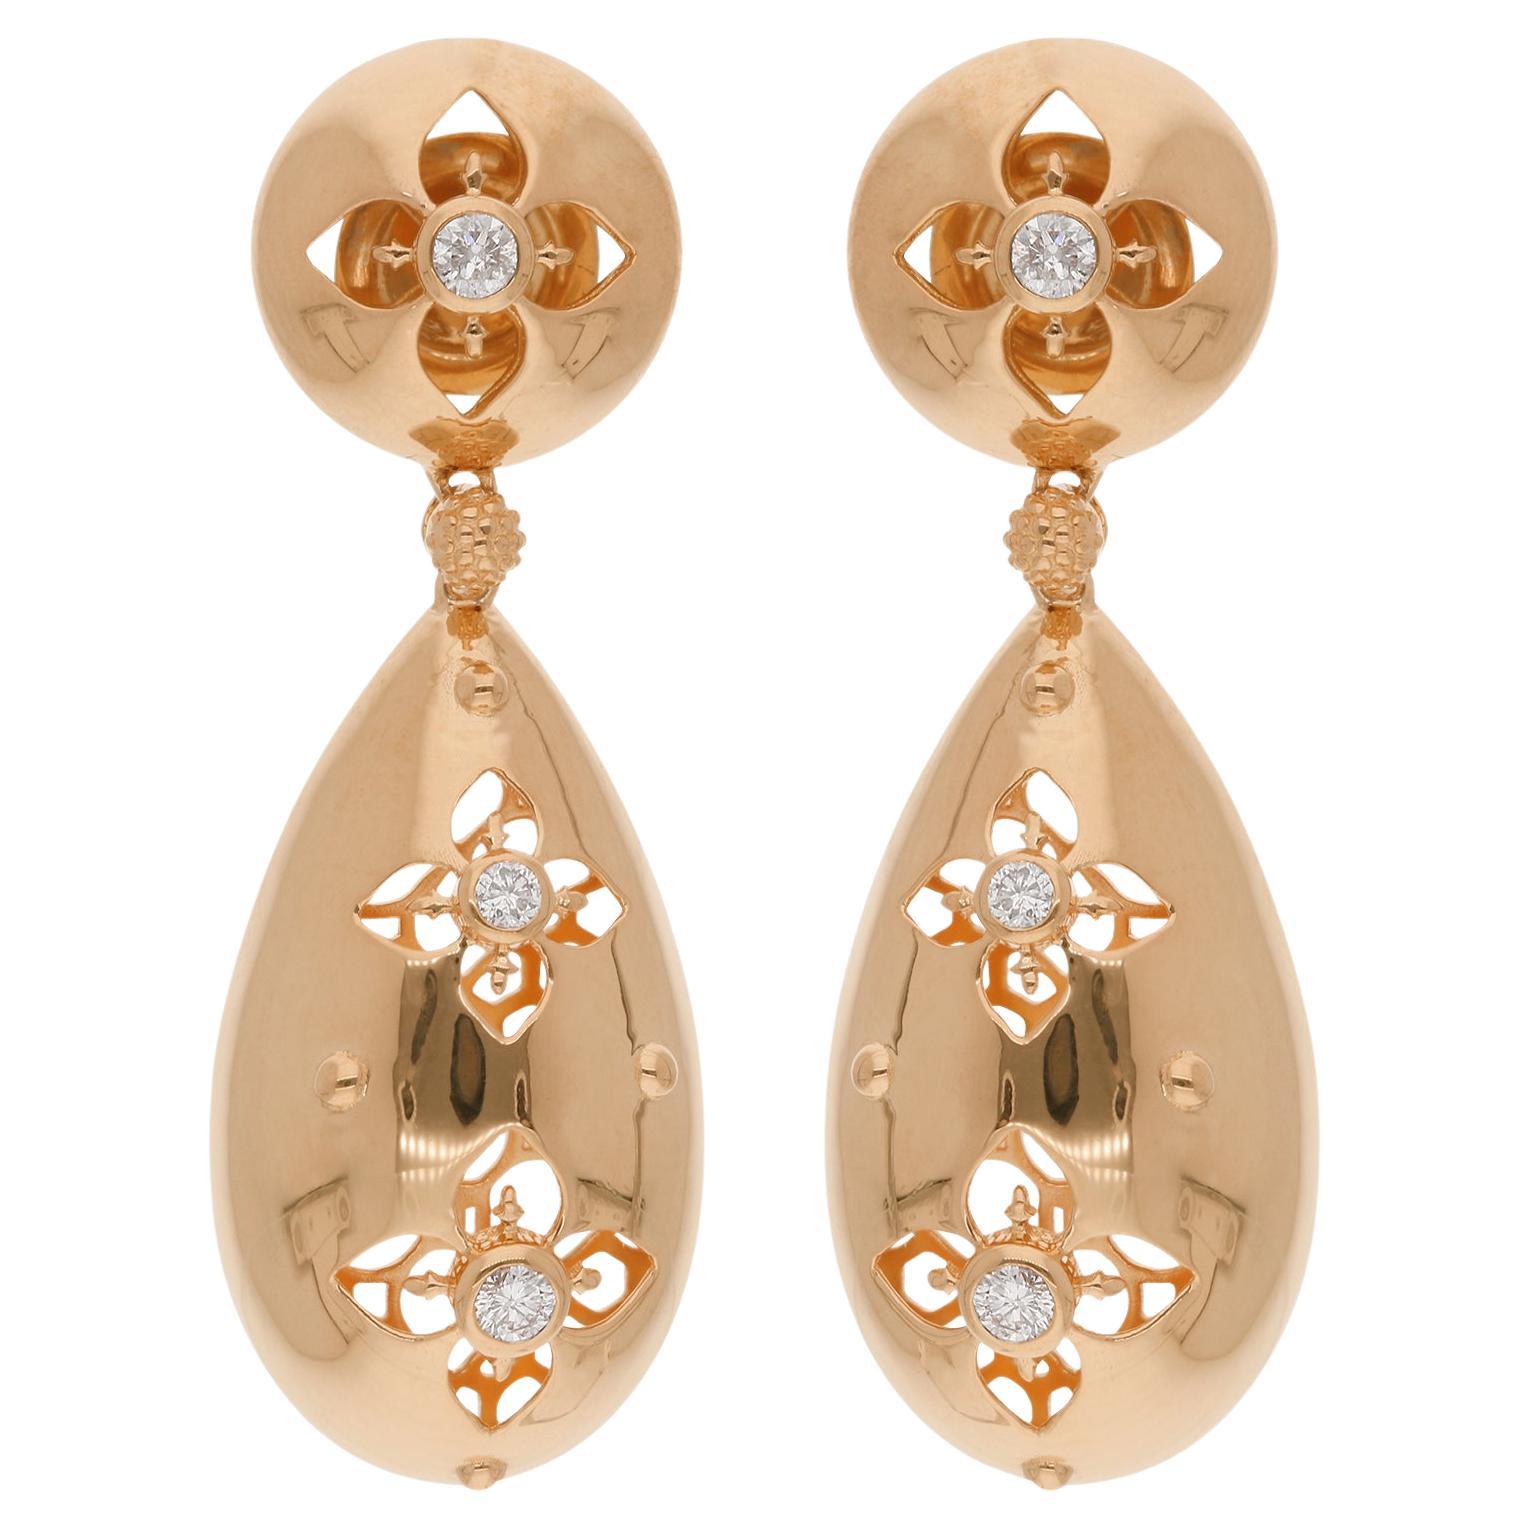 Natural 0.28 Carat Diamond Flower Dangle Earrings 18 Karat Yellow Gold Jewelry